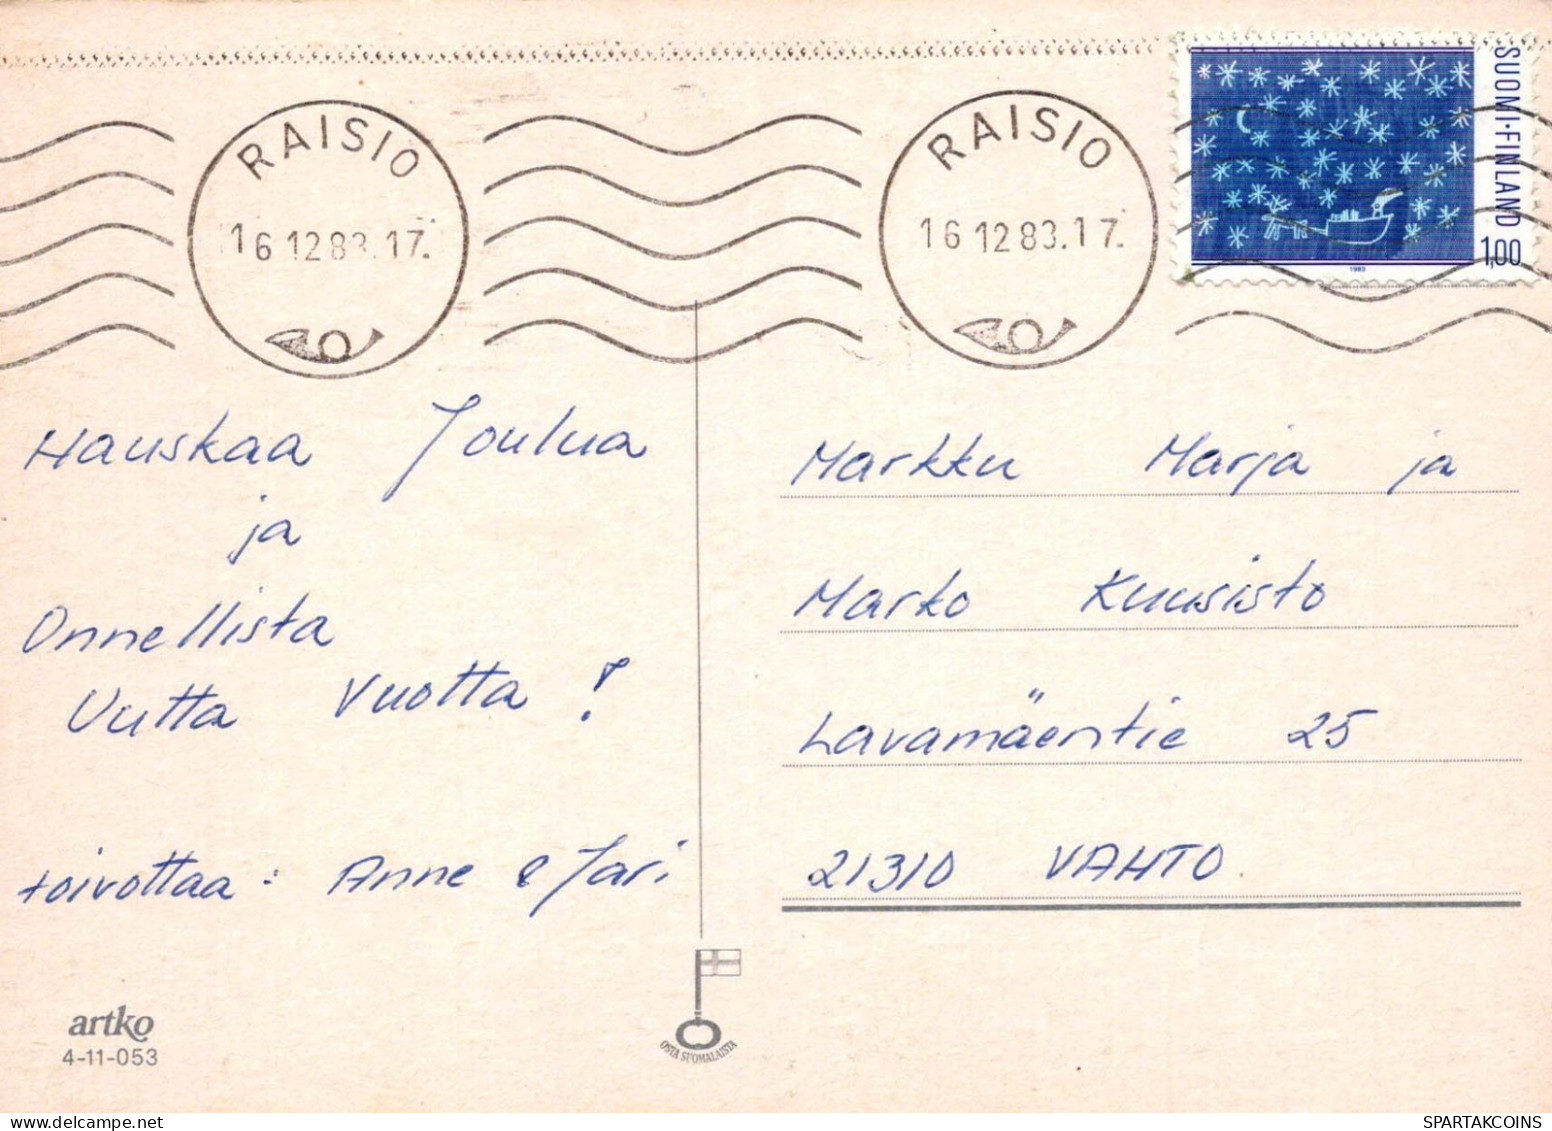 PAPÁ NOEL Feliz Año Navidad GNOMO Vintage Tarjeta Postal CPSM #PBL934.A - Santa Claus